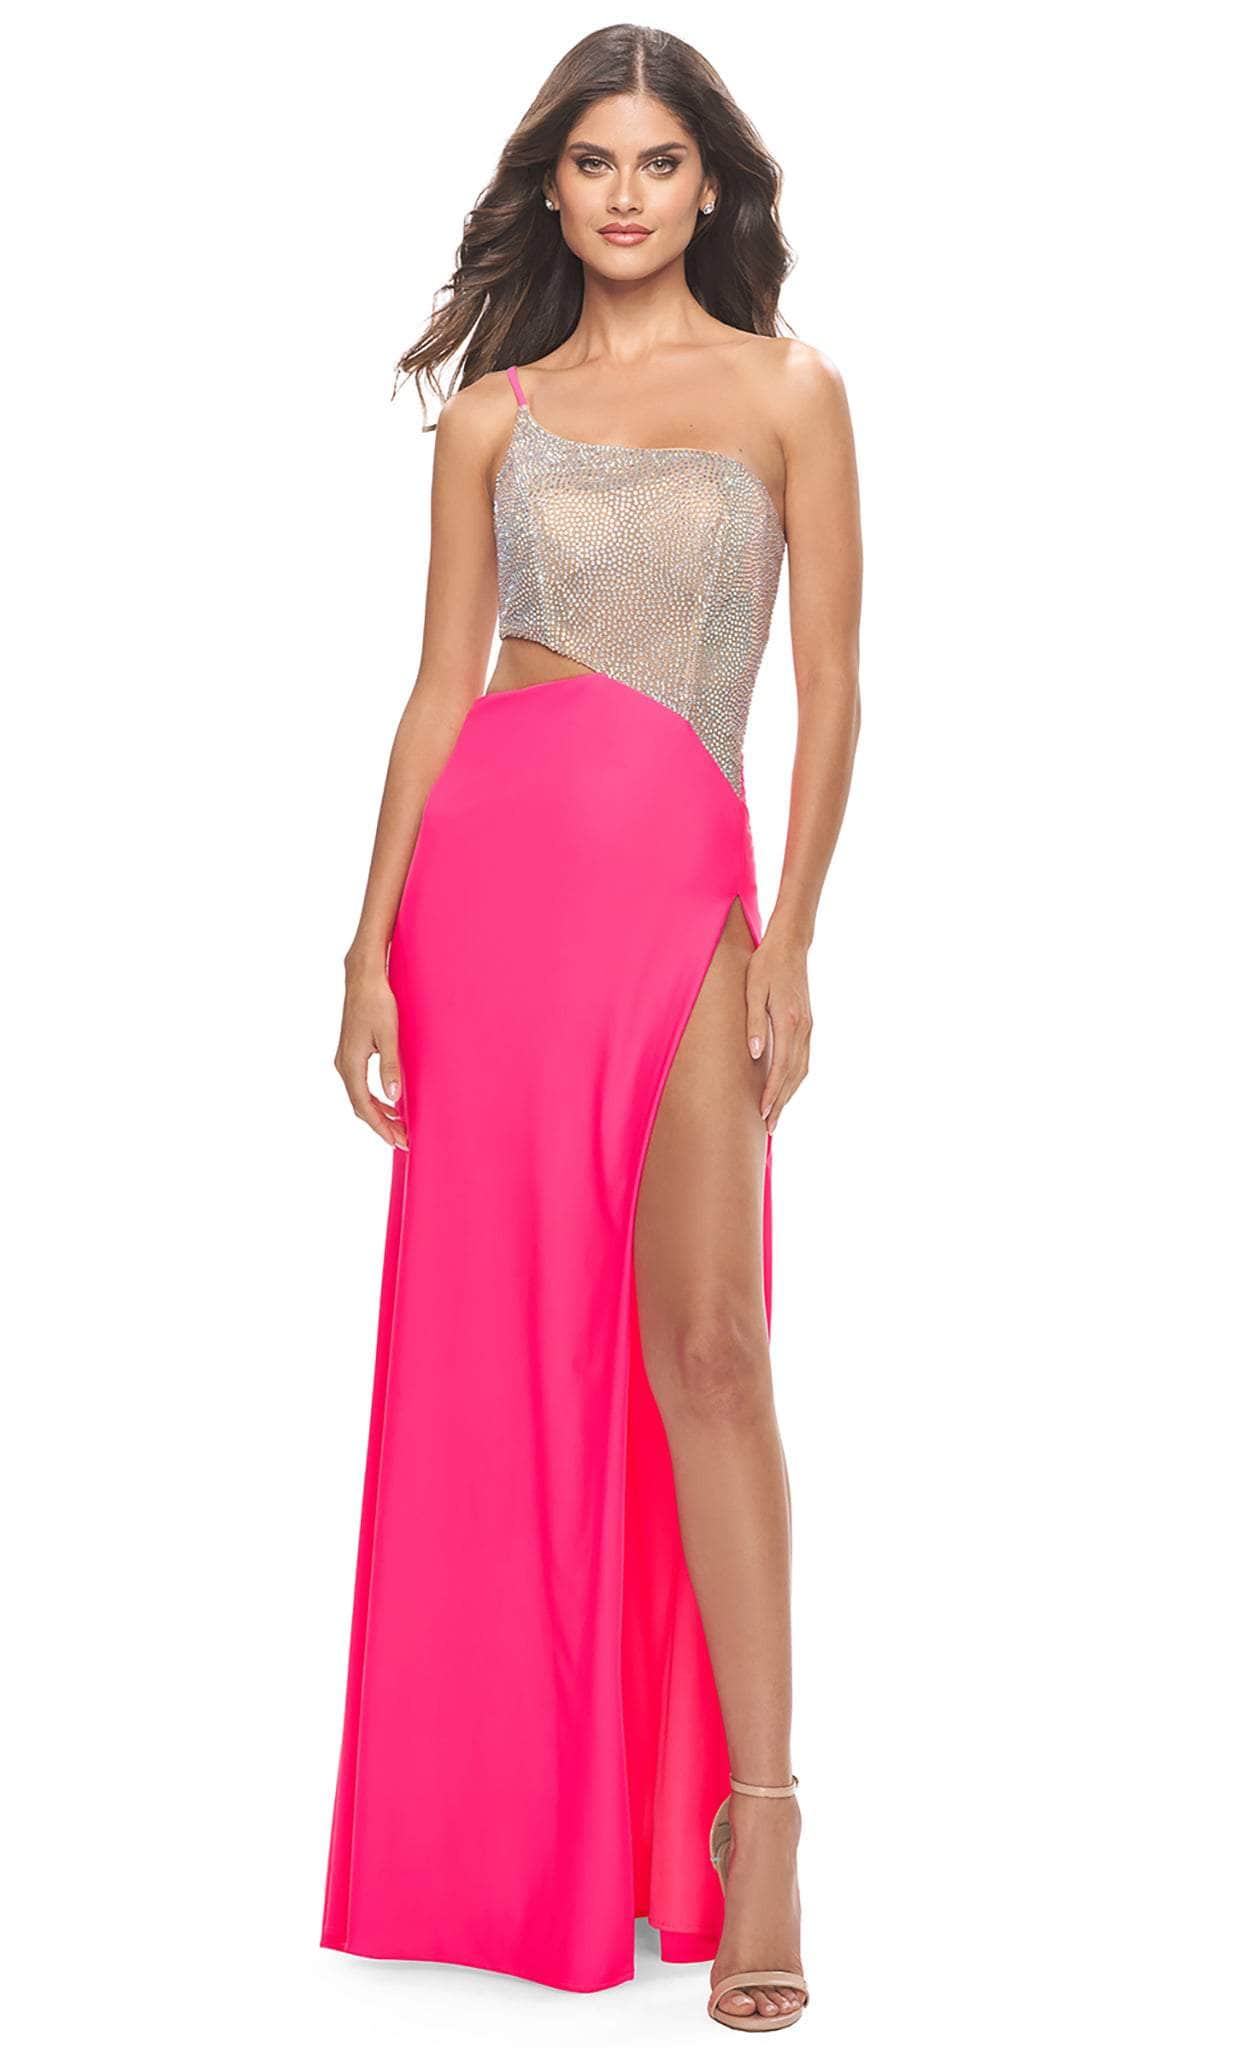 Image of La Femme 31600 - Jeweled Cutout Prom Dress with Slit